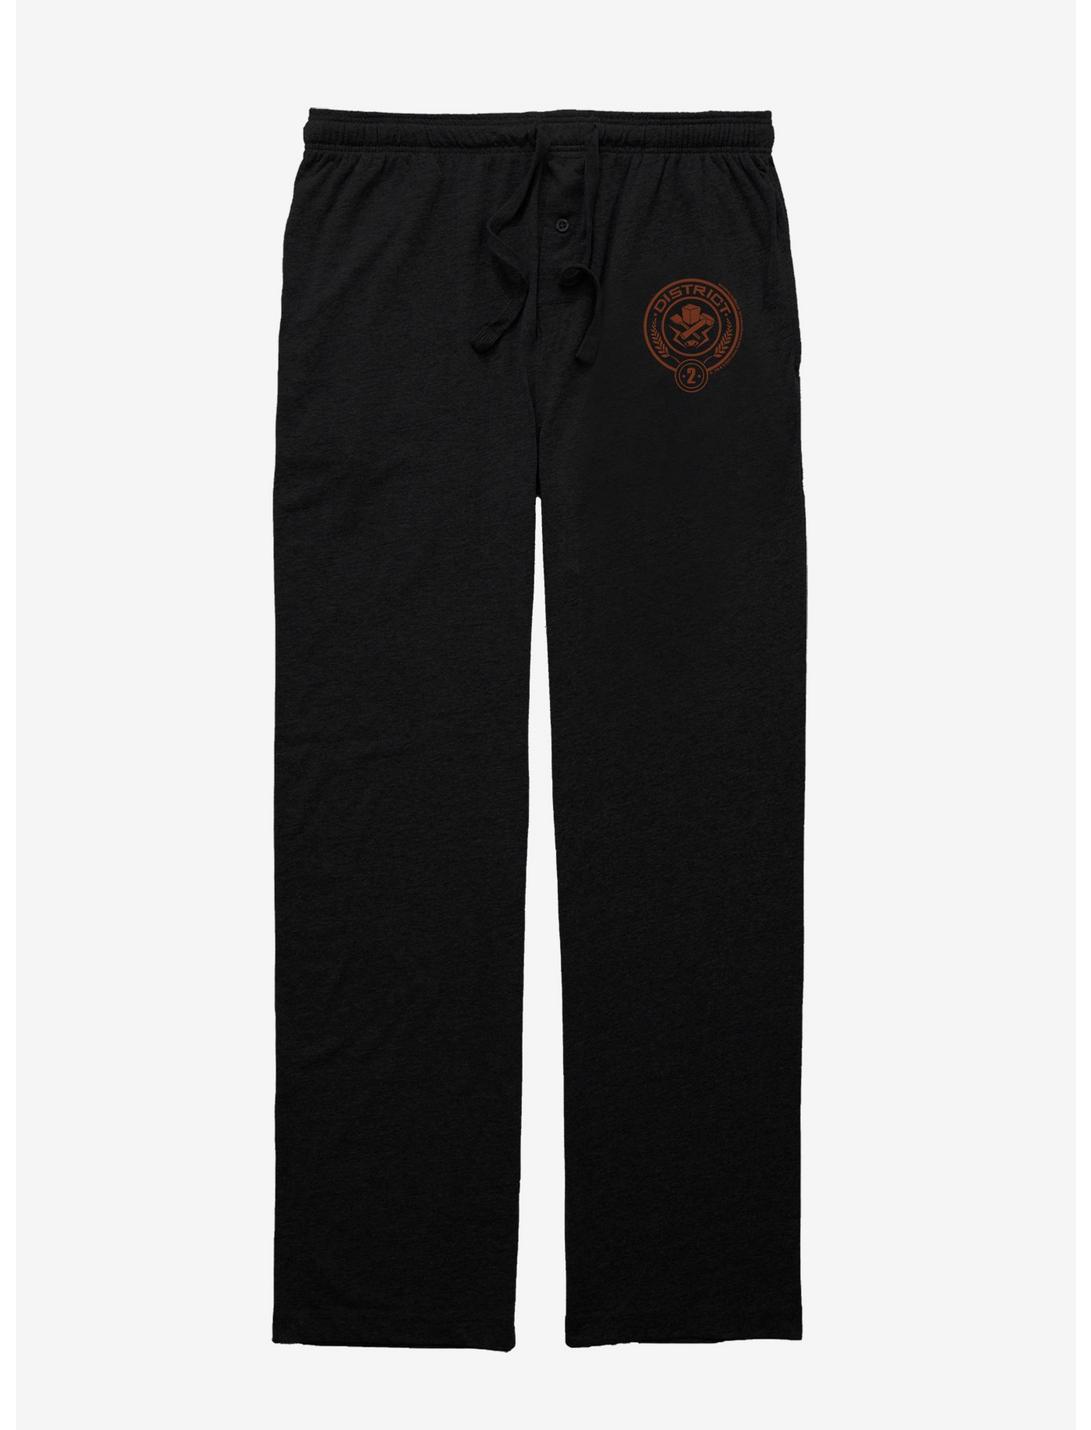 Hunger Games District 2 Emblem Pajama Pants, BLACK, hi-res